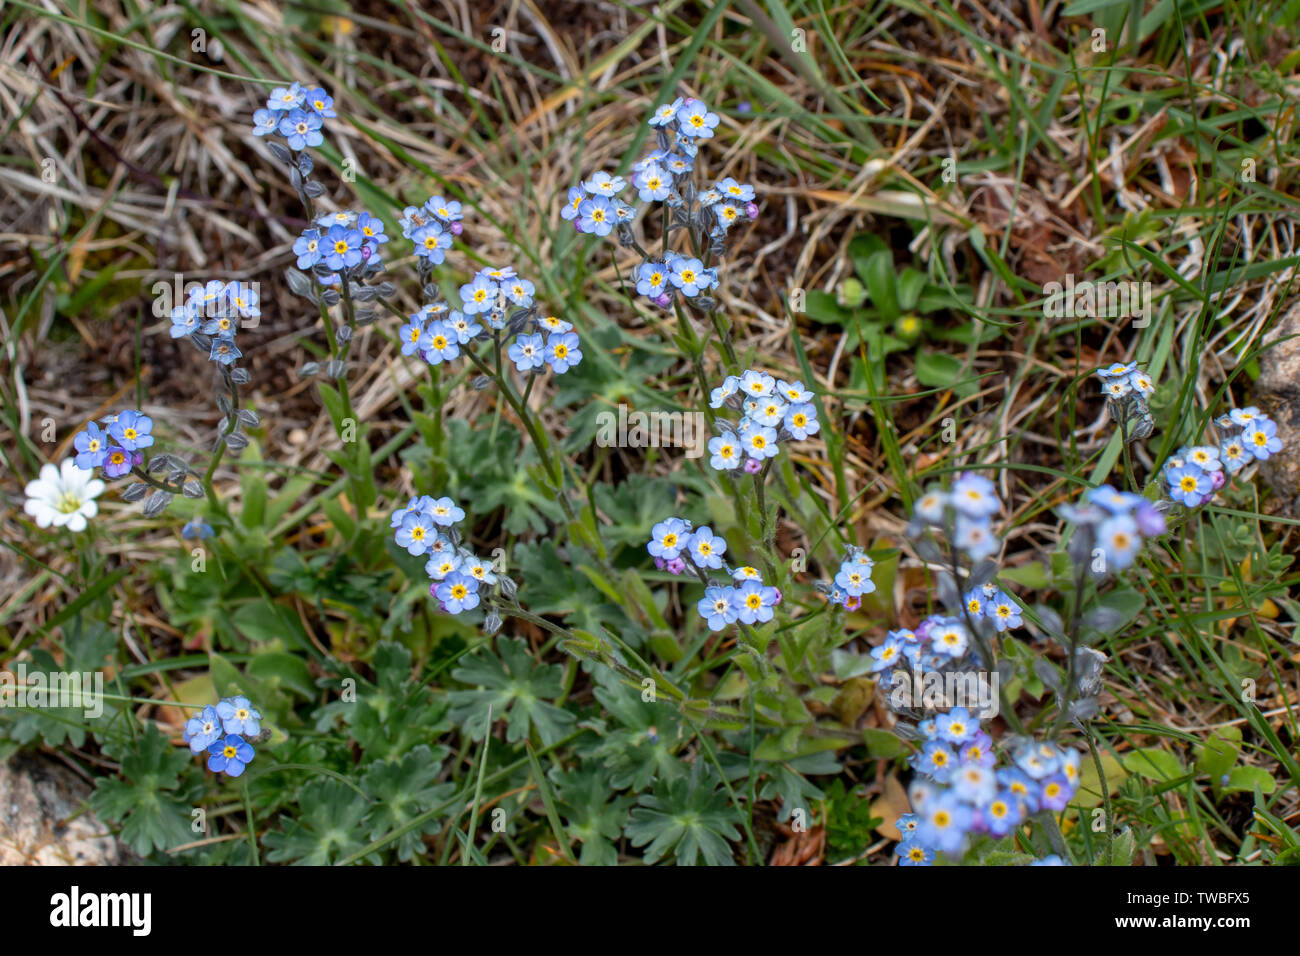 Alpine forget-me-not or Myosotis alpestris flowering plants on the alpine meadow Stock Photo